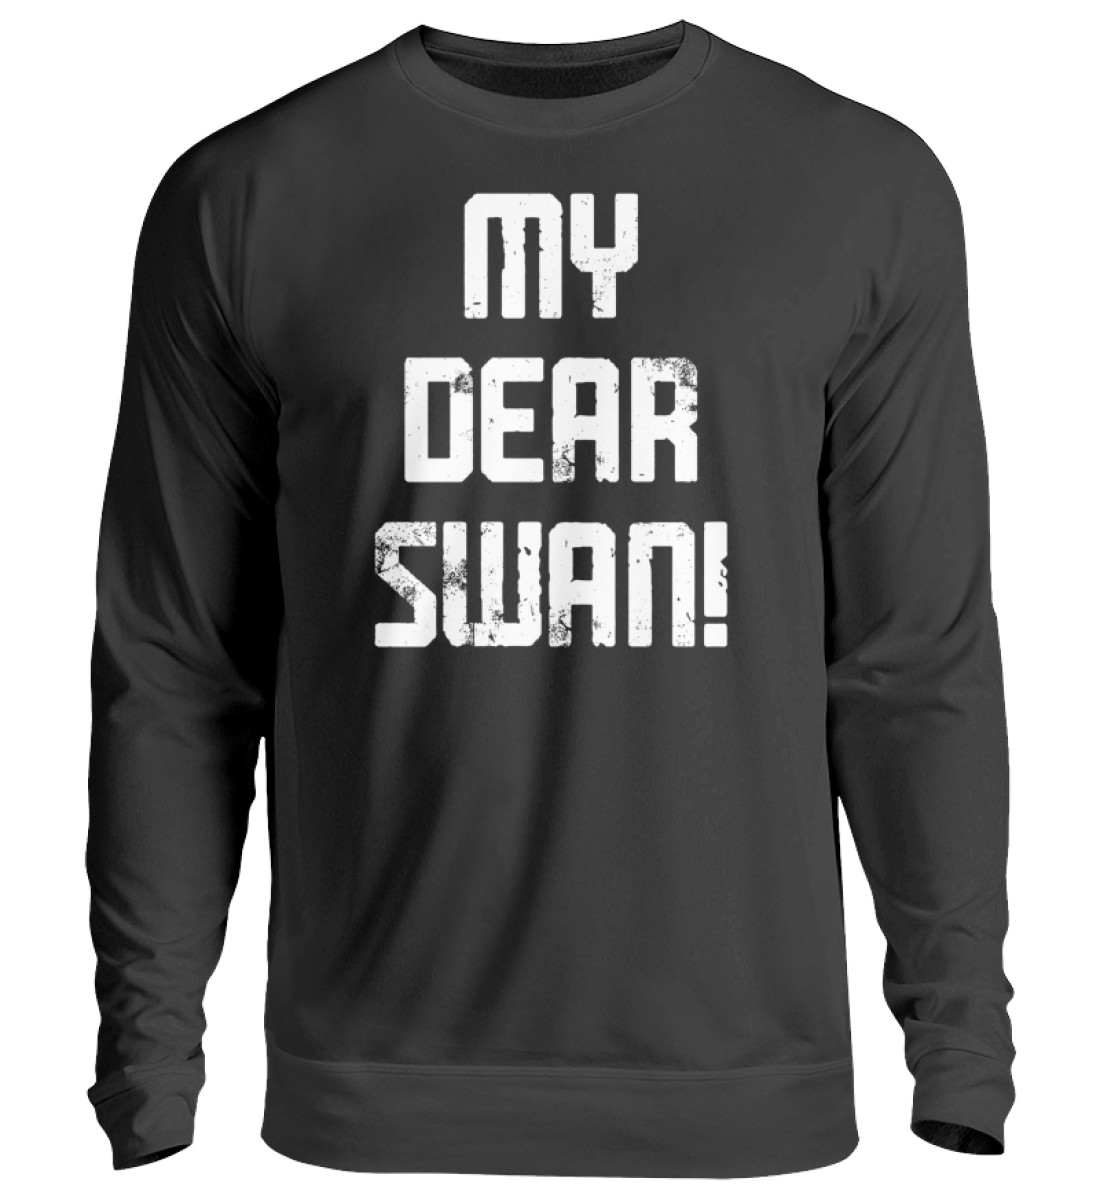 My Dear Swan - Unisex Pullover-639